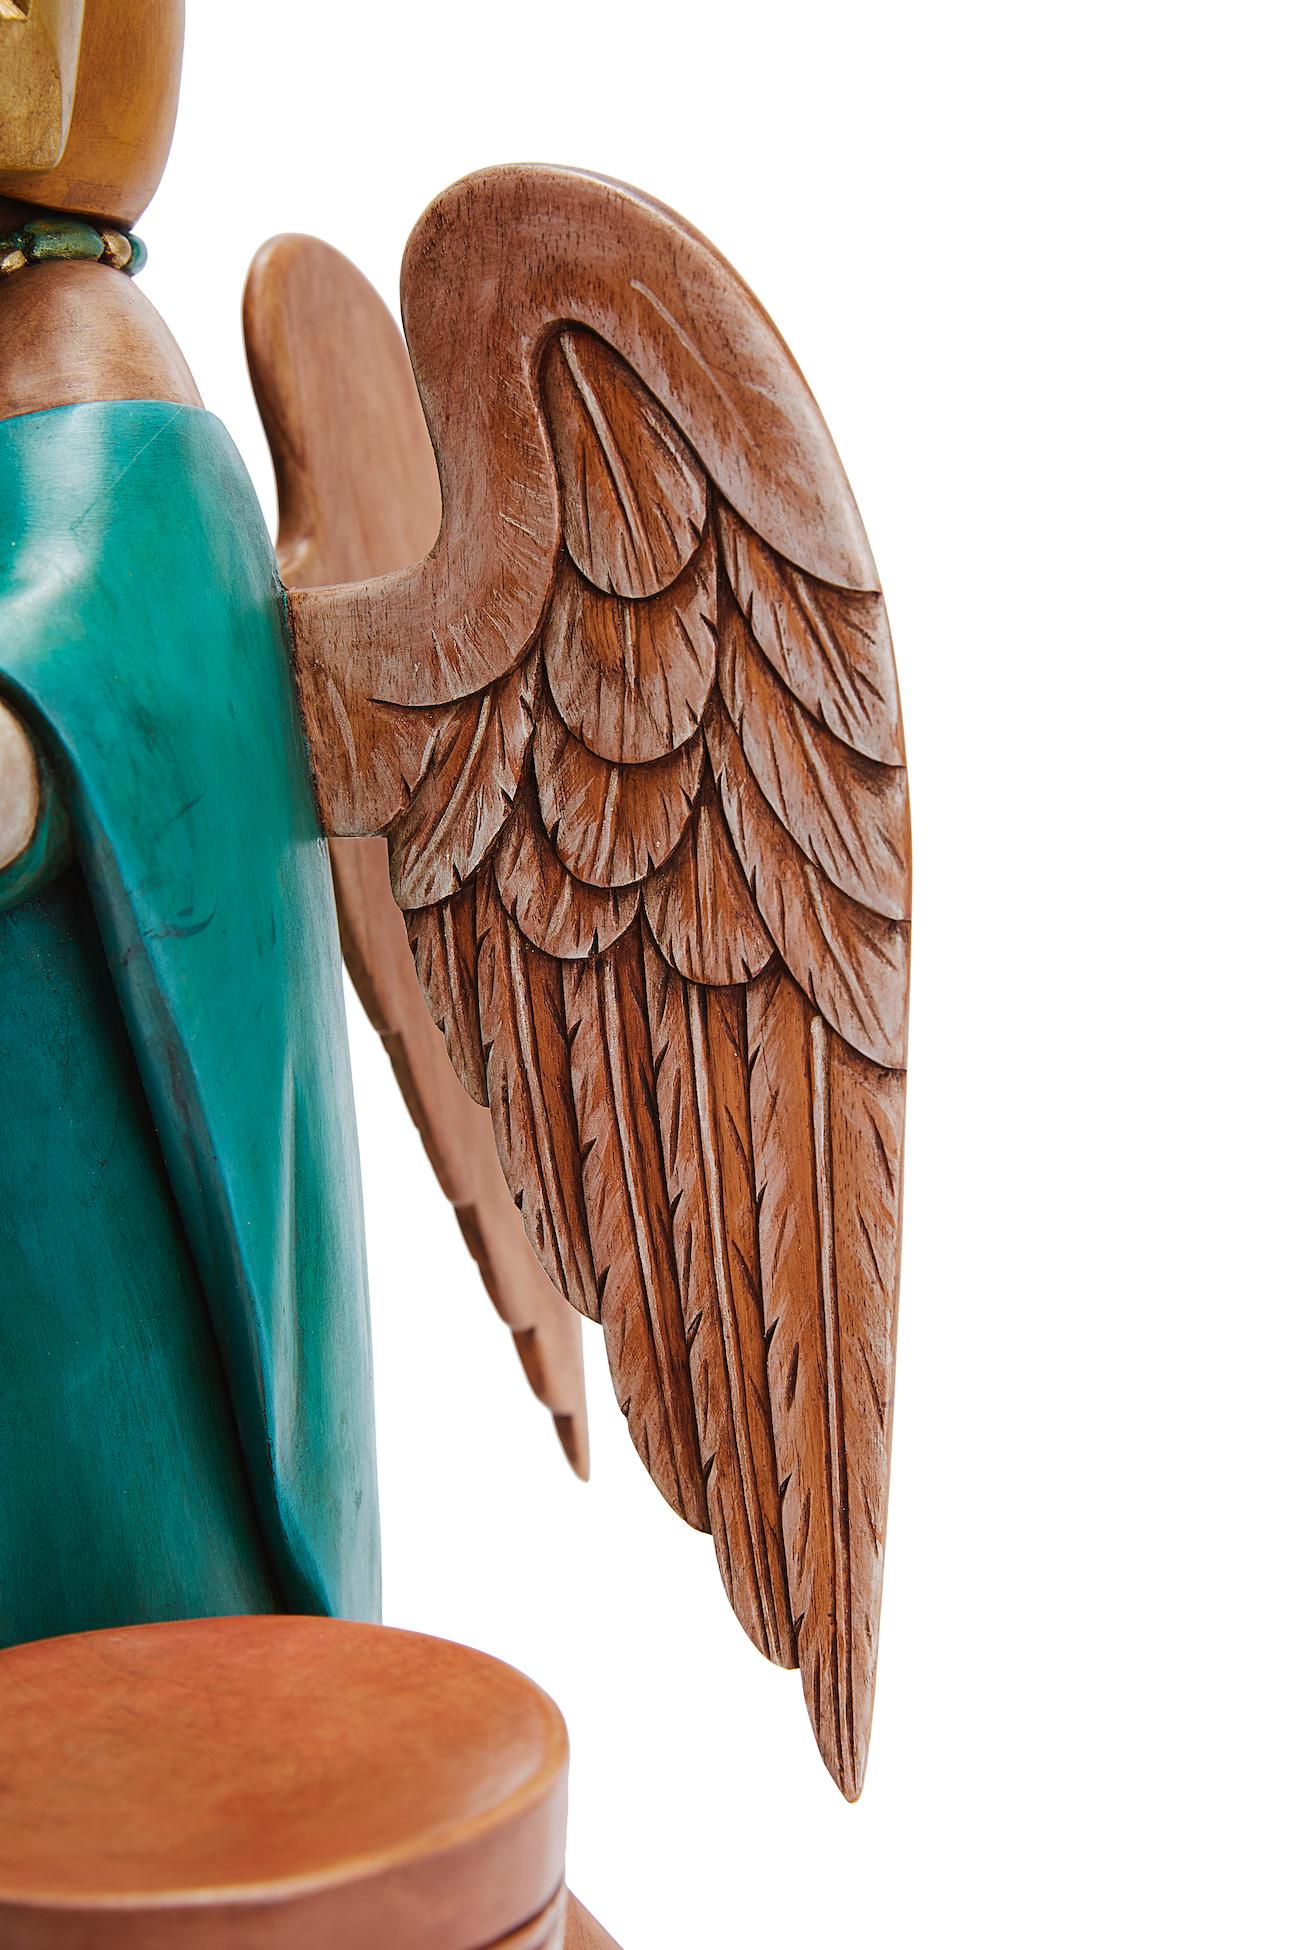 Angel Maya - Maya Angel - Mexican Folk Art  Cactus Fine Art - Brown Figurative Sculpture by Miguel Martinez Juarez